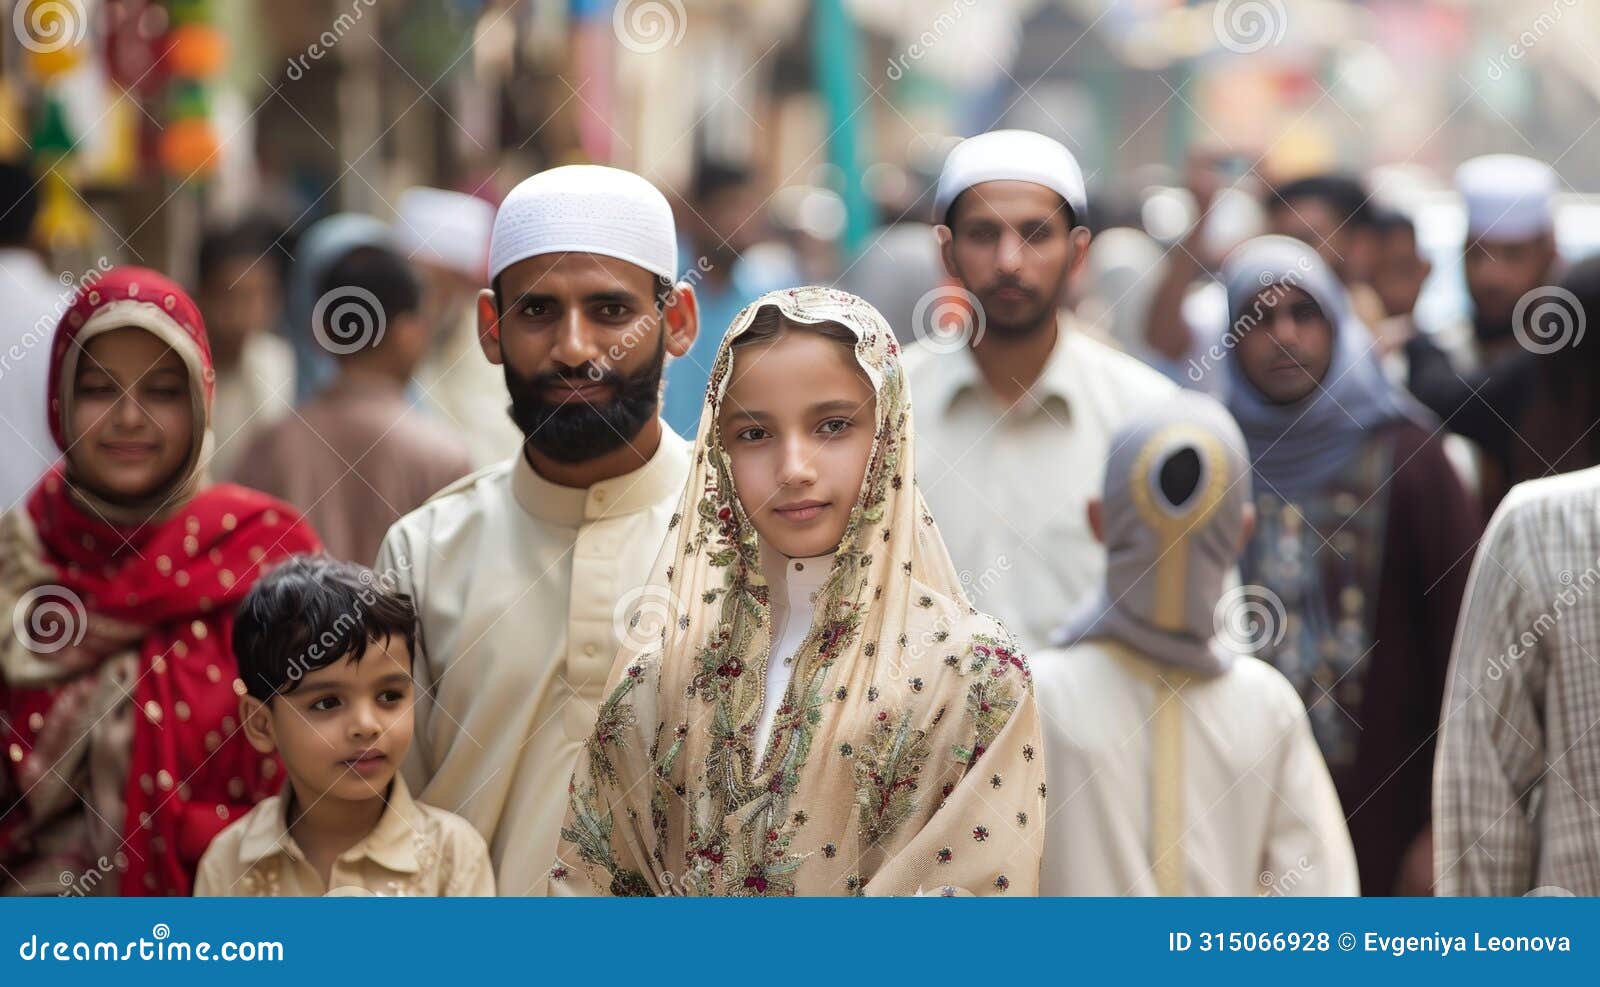 eid al fitr celebration with emotional fervor and joy on city streets in festive atmosphere